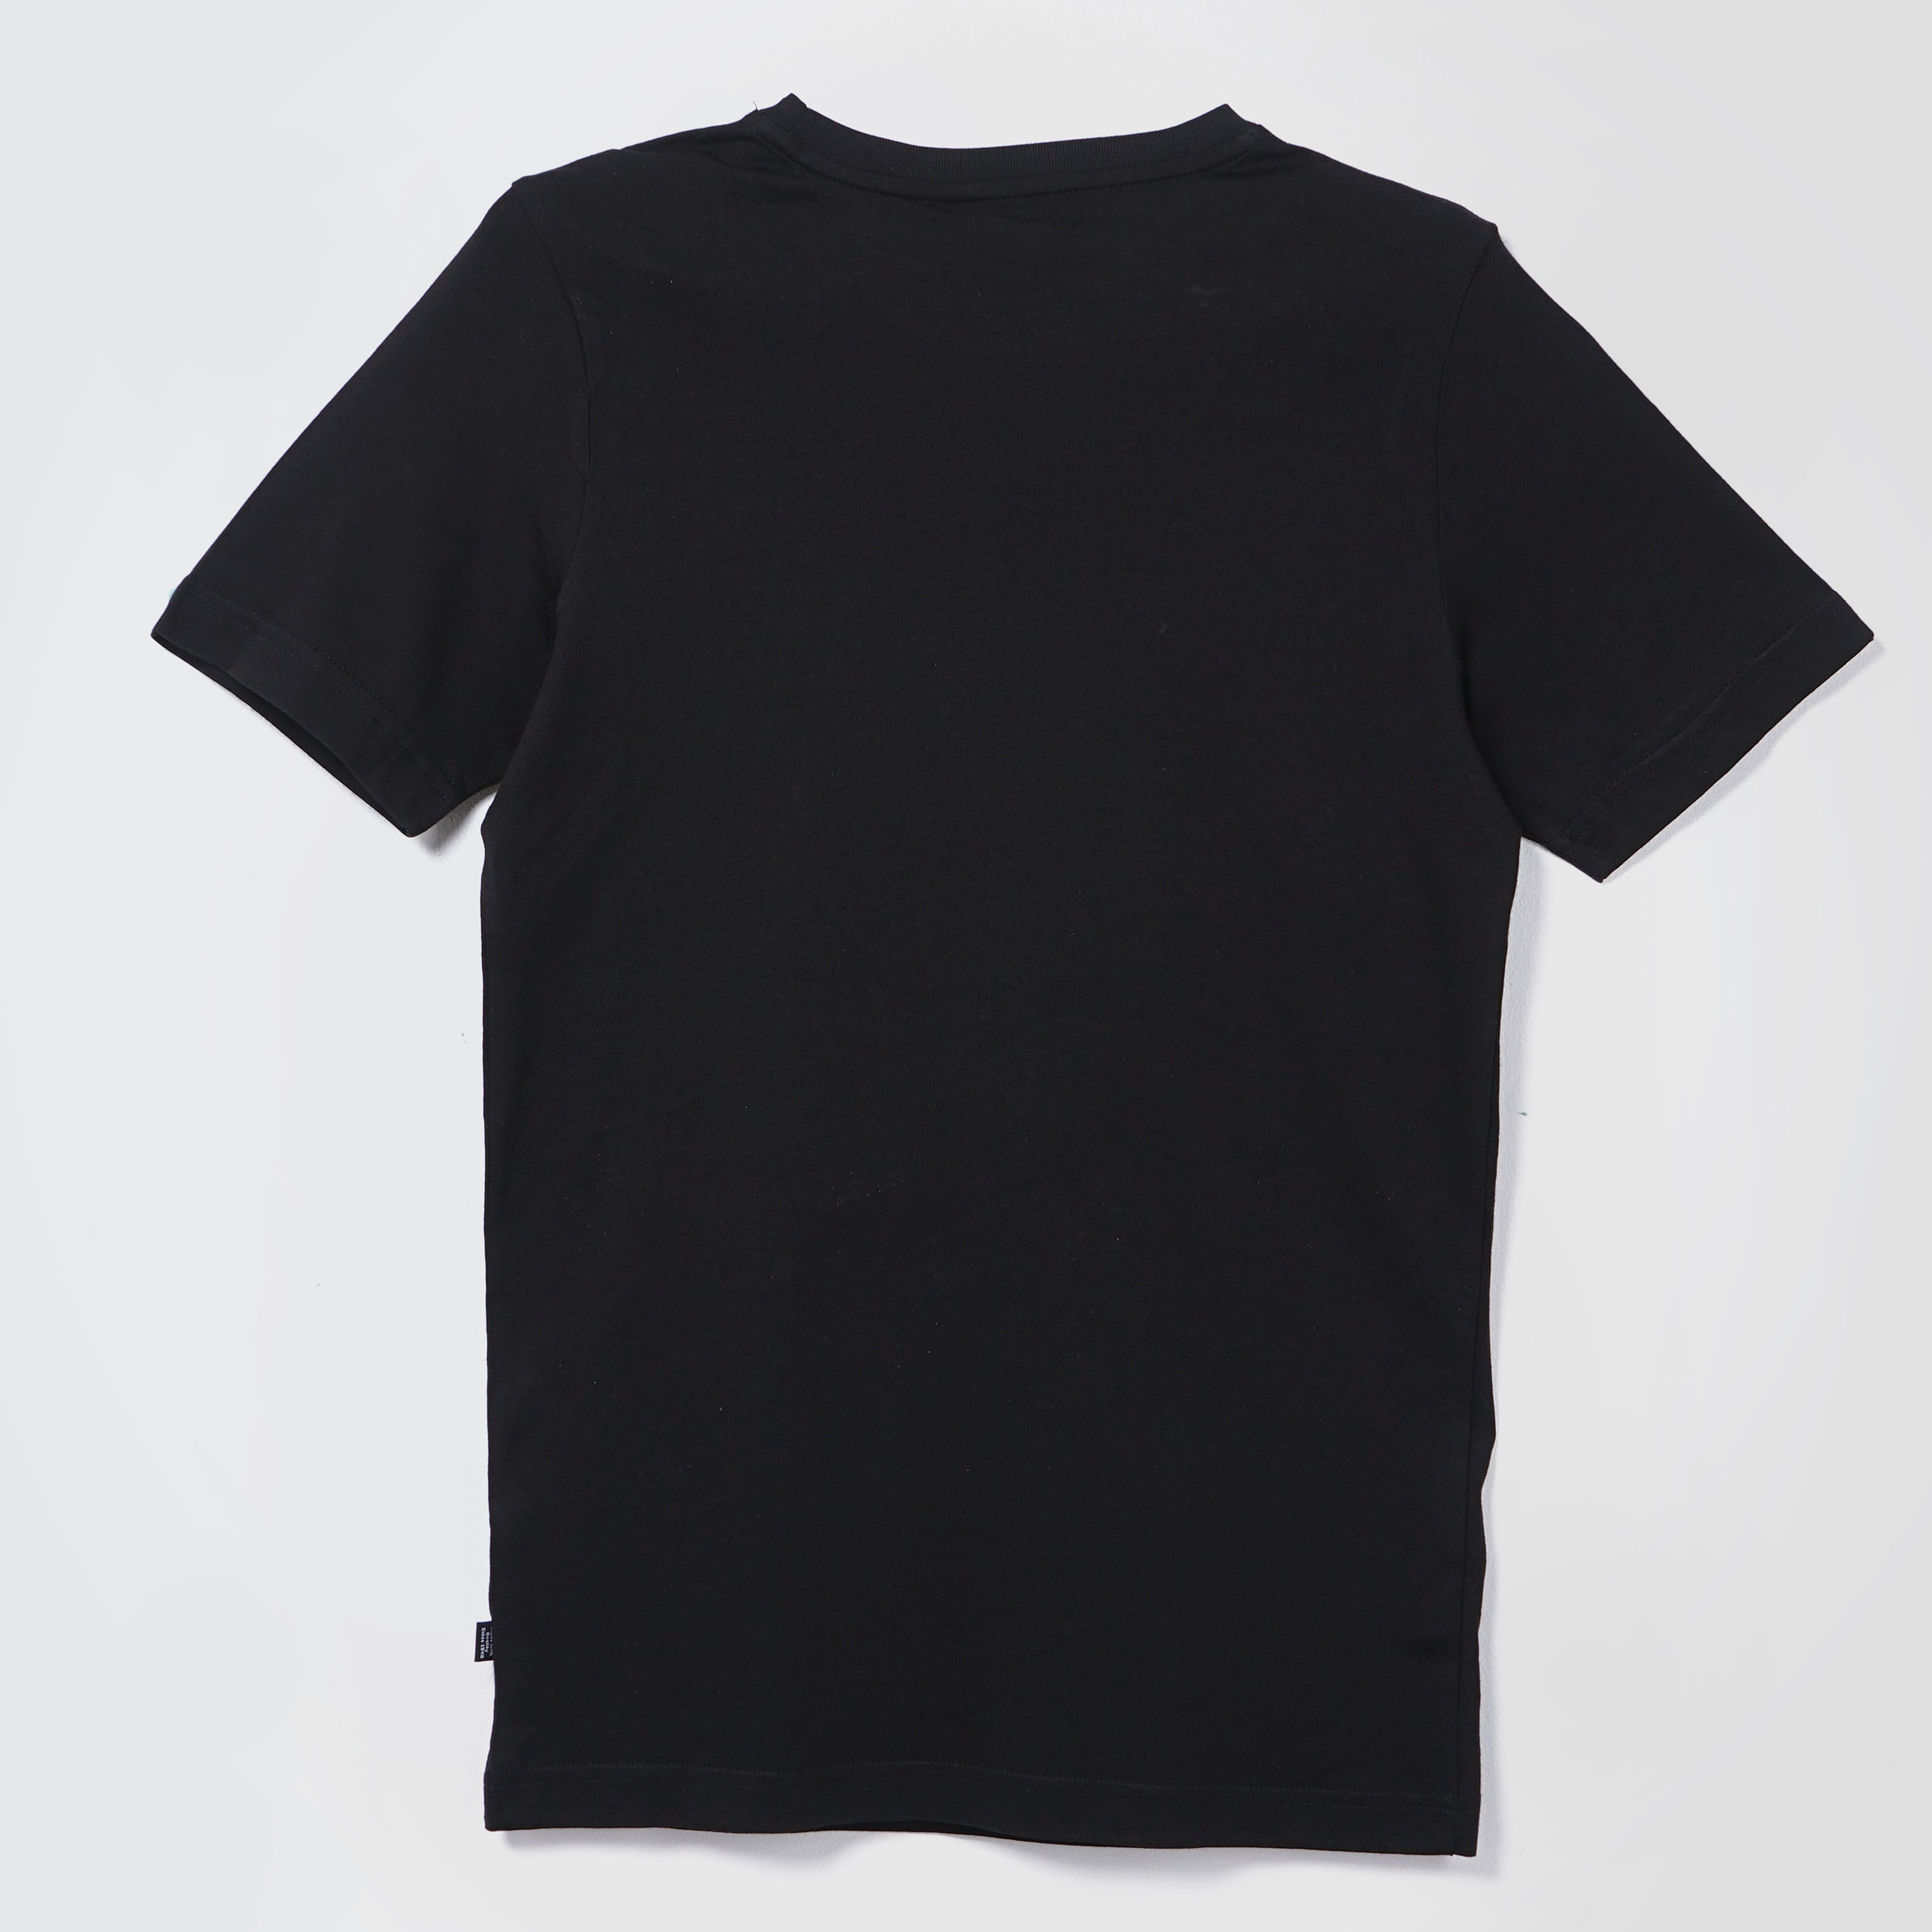 Puma Short Sleeves Printed Black T-Shirt - Marca Deals - puma